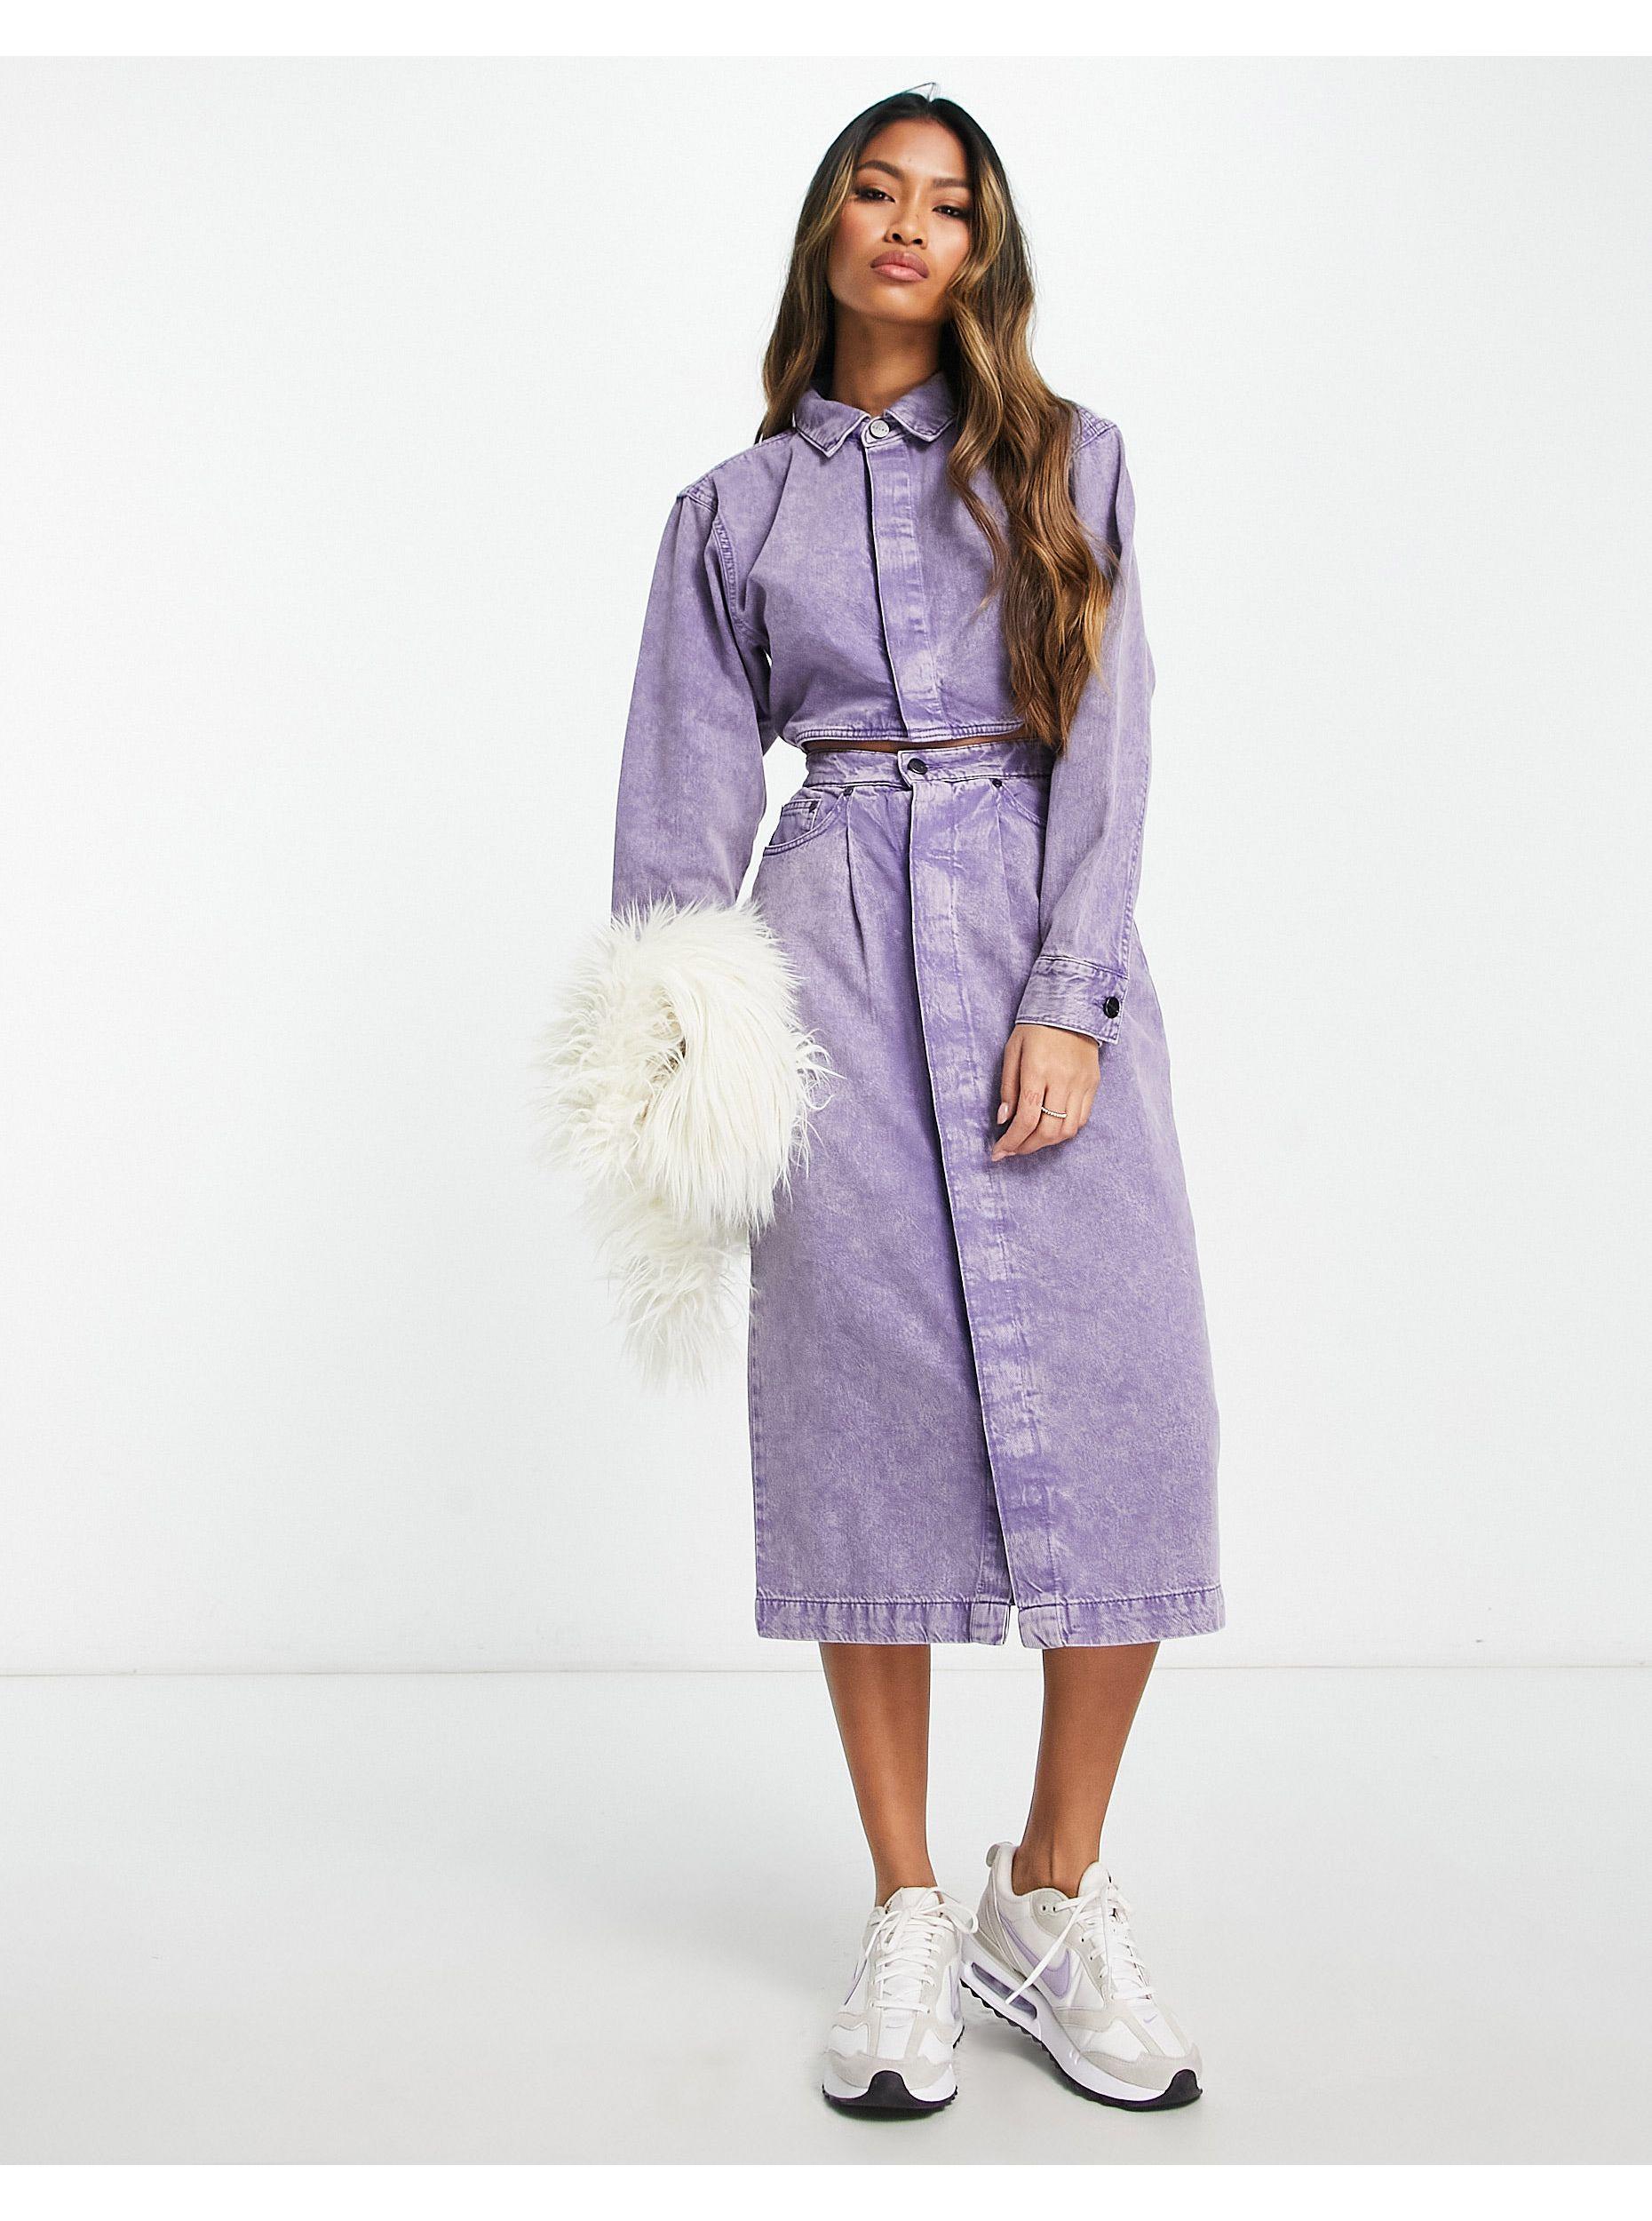 LIMITED COLLECTION Plus Size Purple Longline Denim Jacket | Yours Clothing